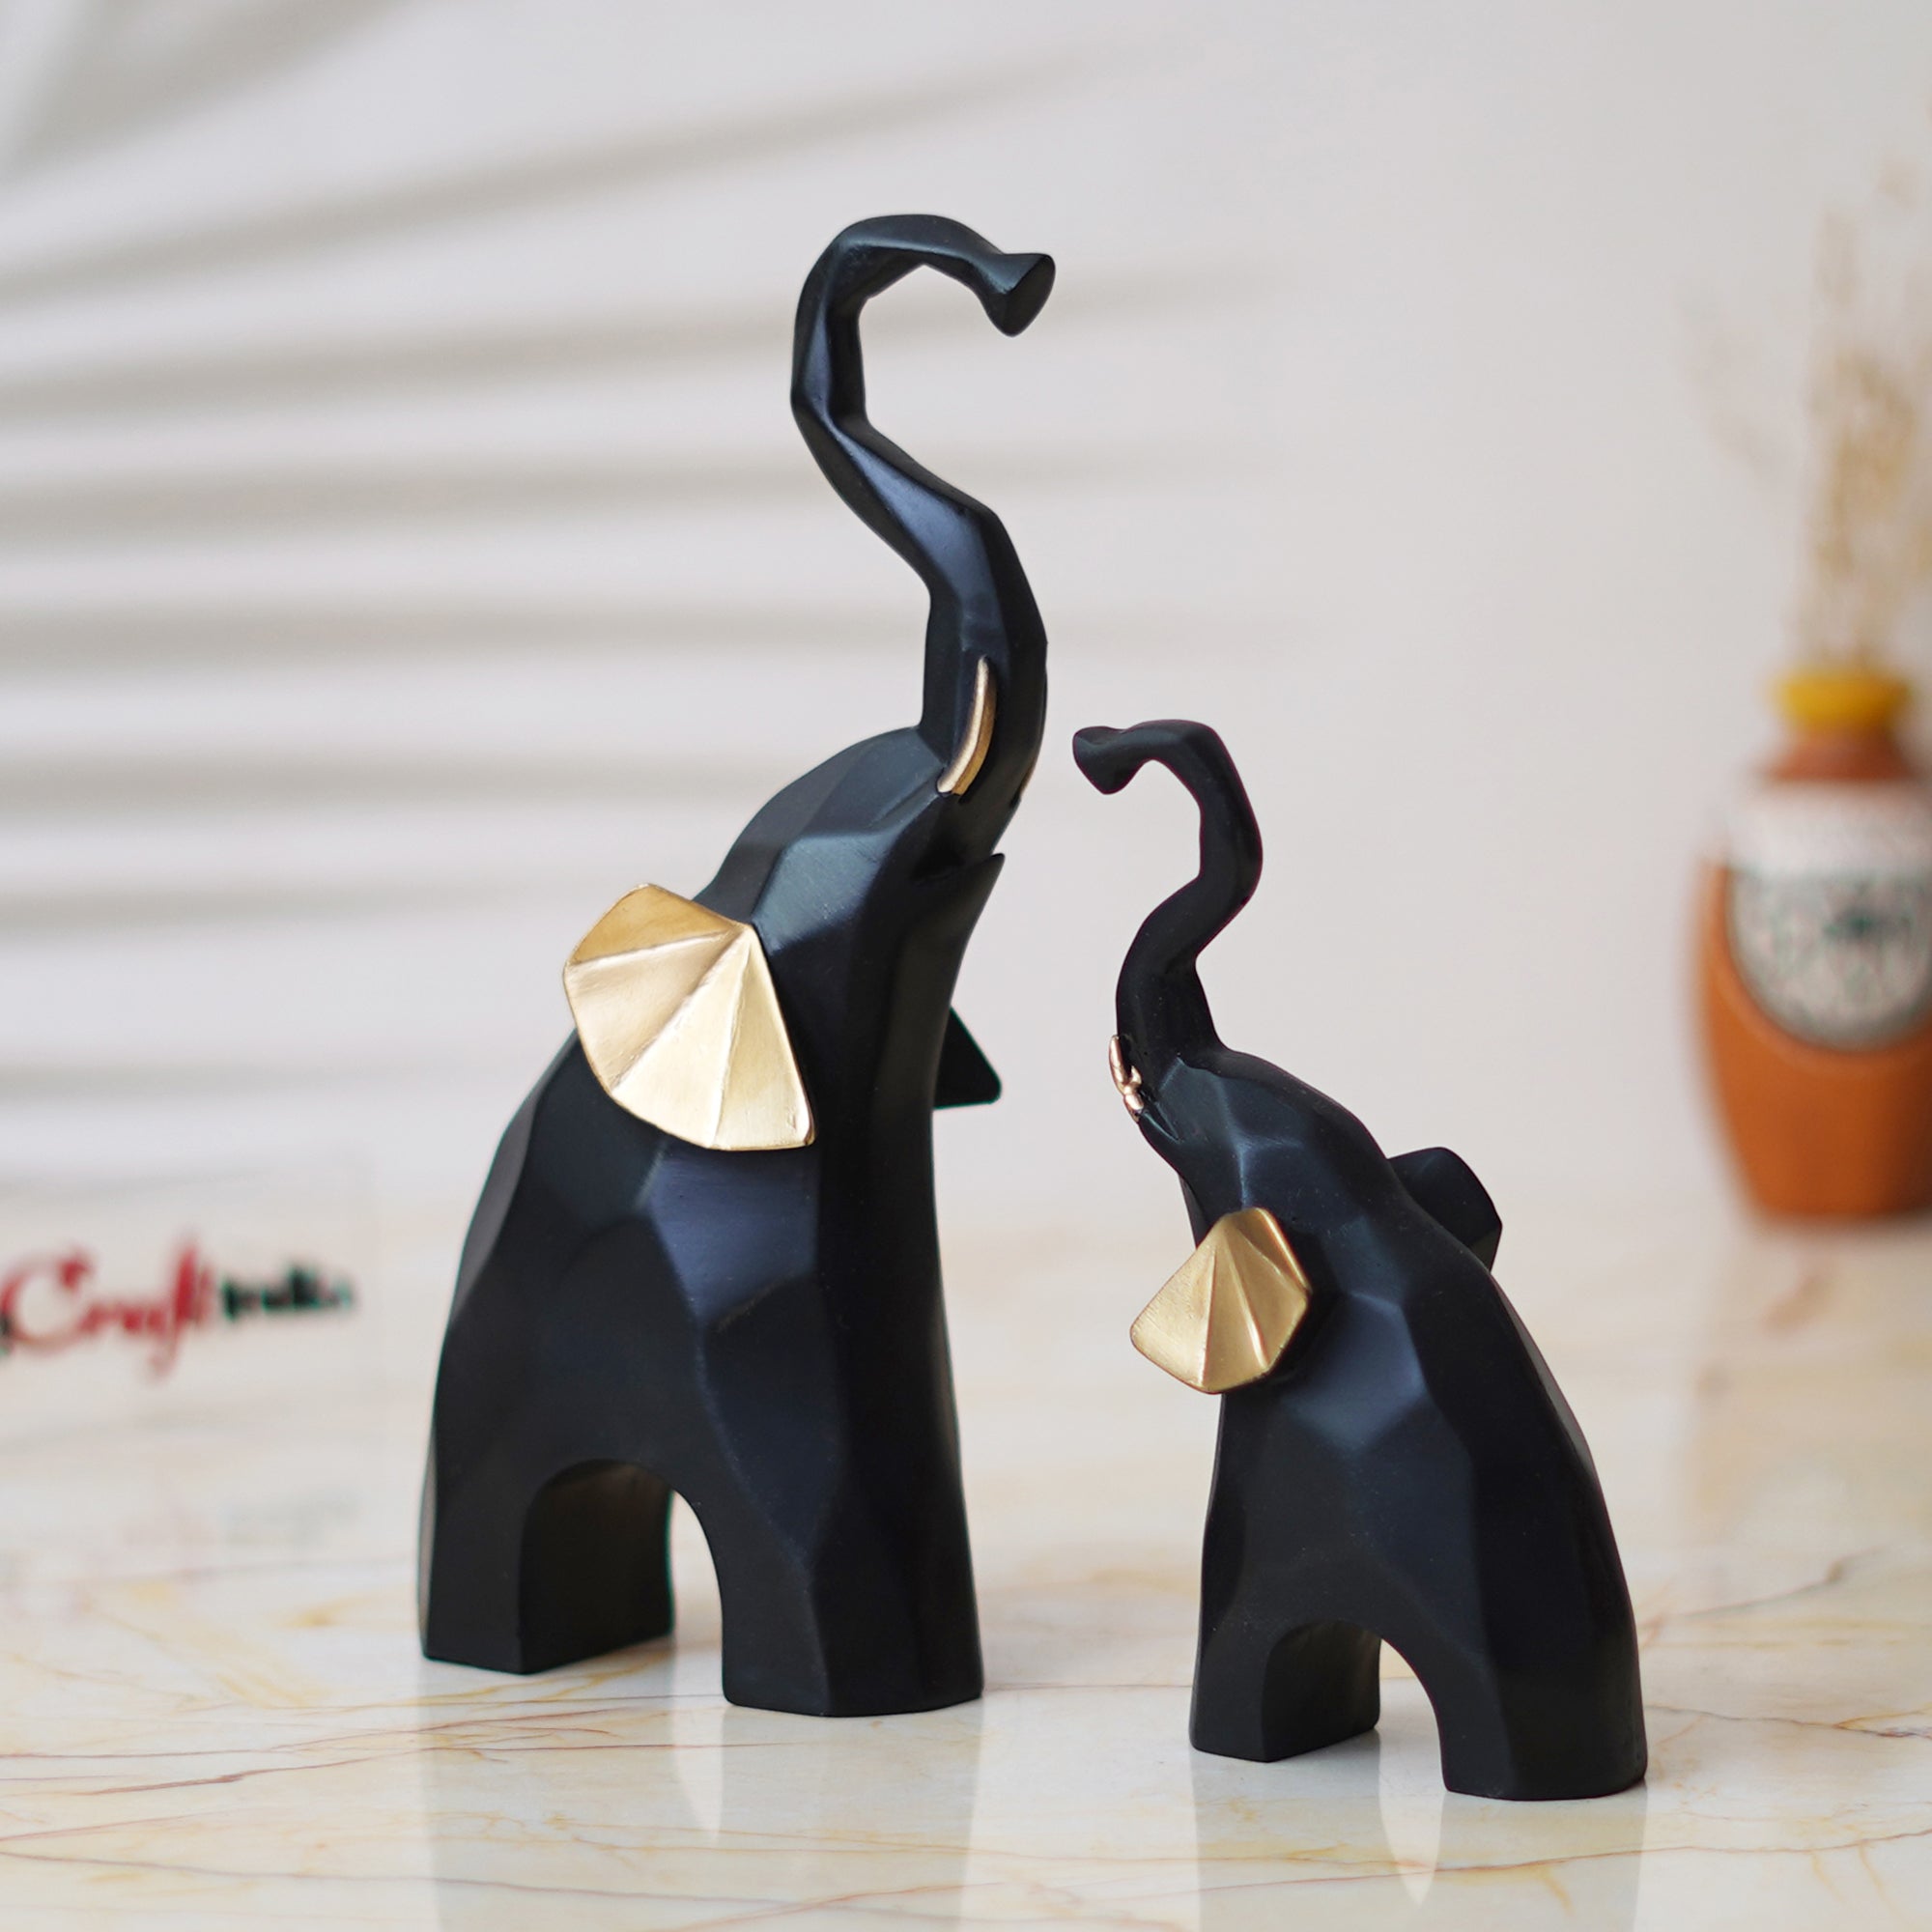 Set of 2 Gold & Black Elephant Statues Decorative Animal Showpieces 4